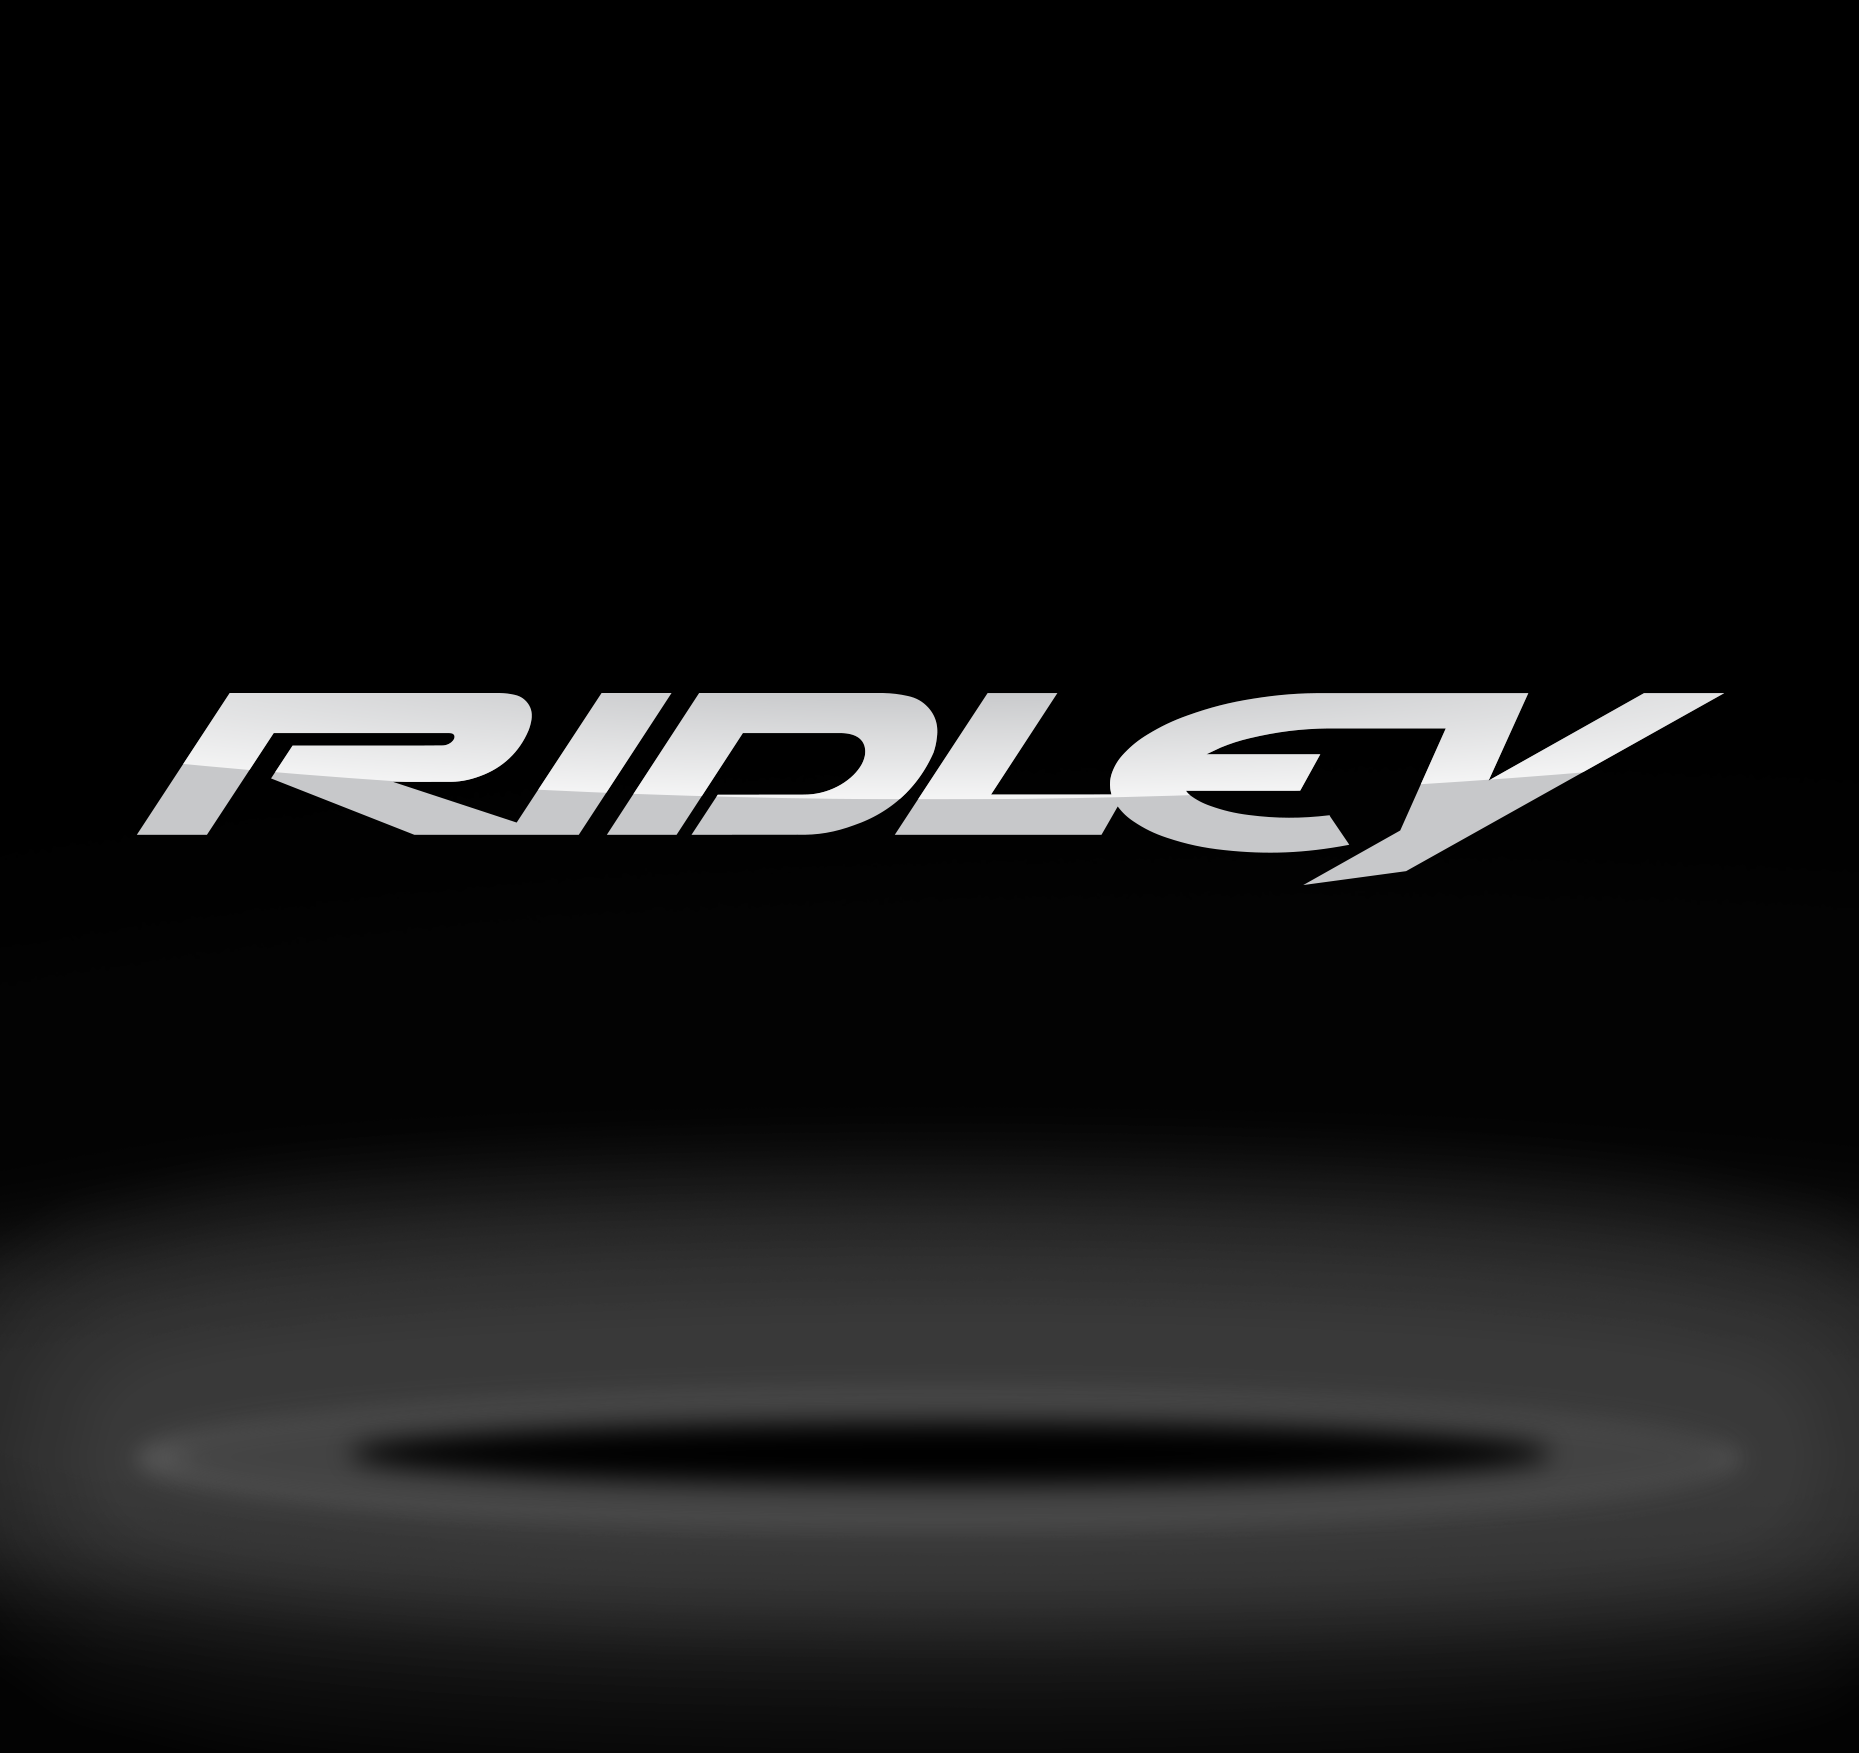 Ridley 